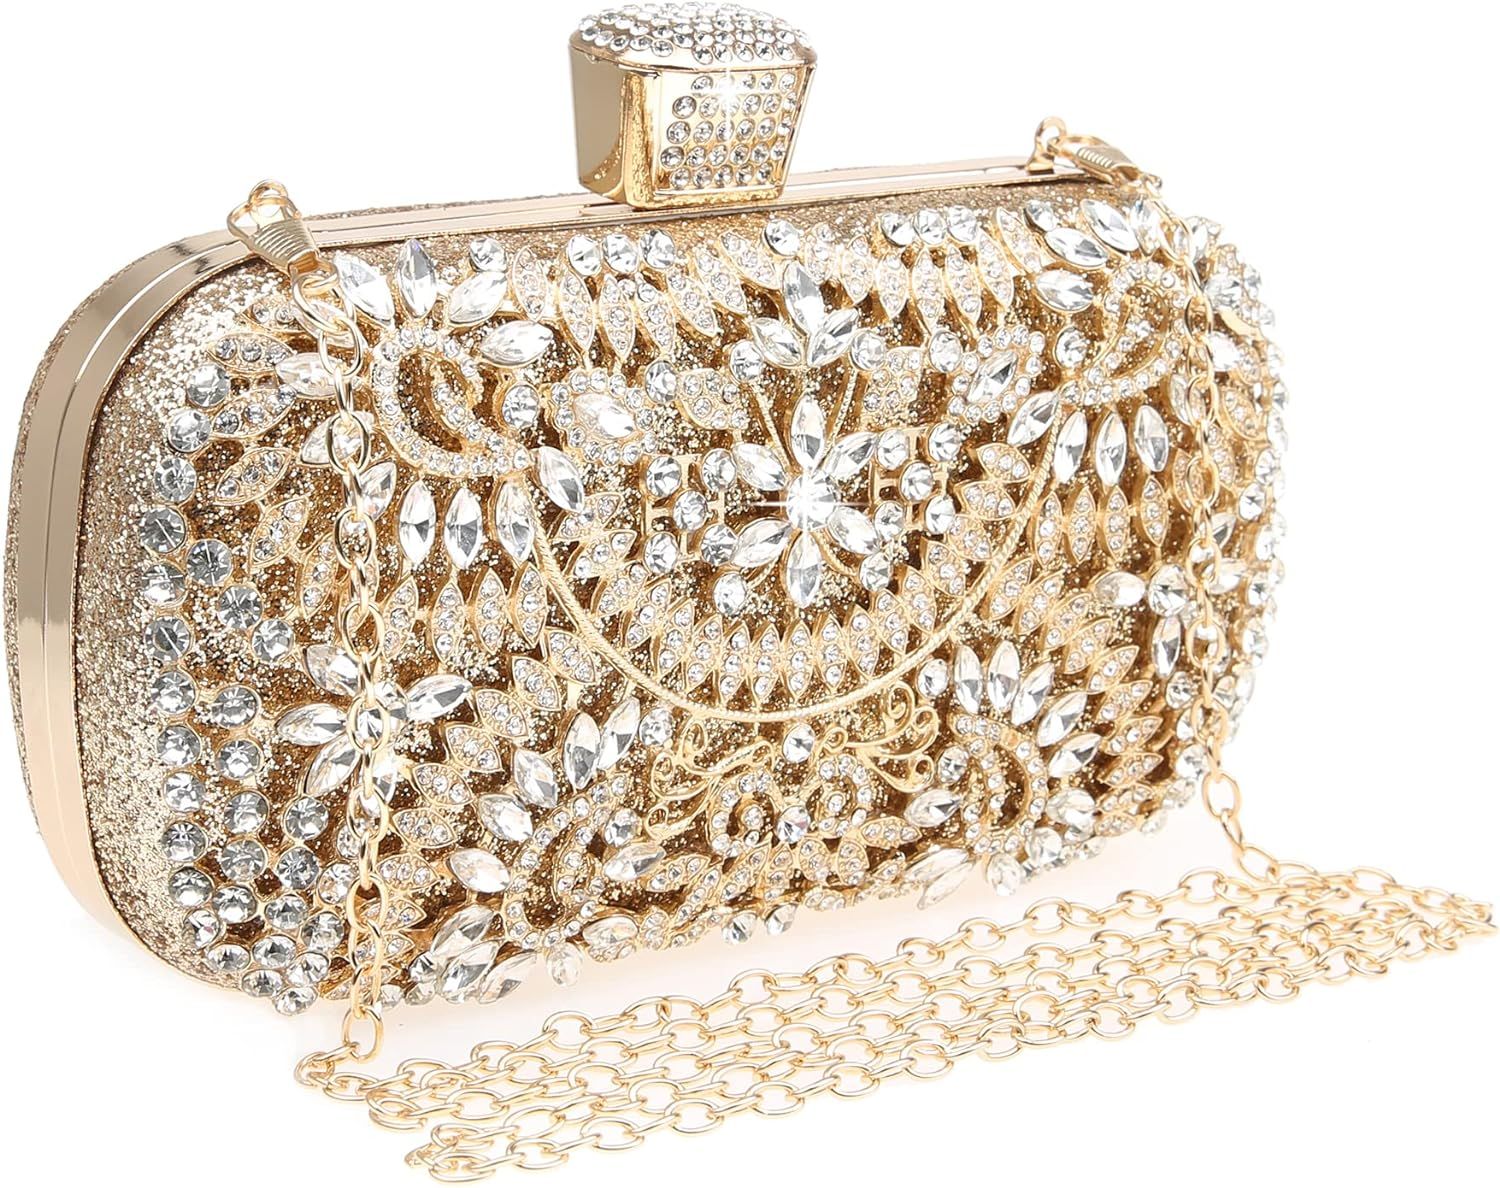 DA BODAN Womens Sparkly Rhinestone Sequin Glitter bag Clutch Evening Handbag Shoulder Bags Purse ... | Amazon (US)